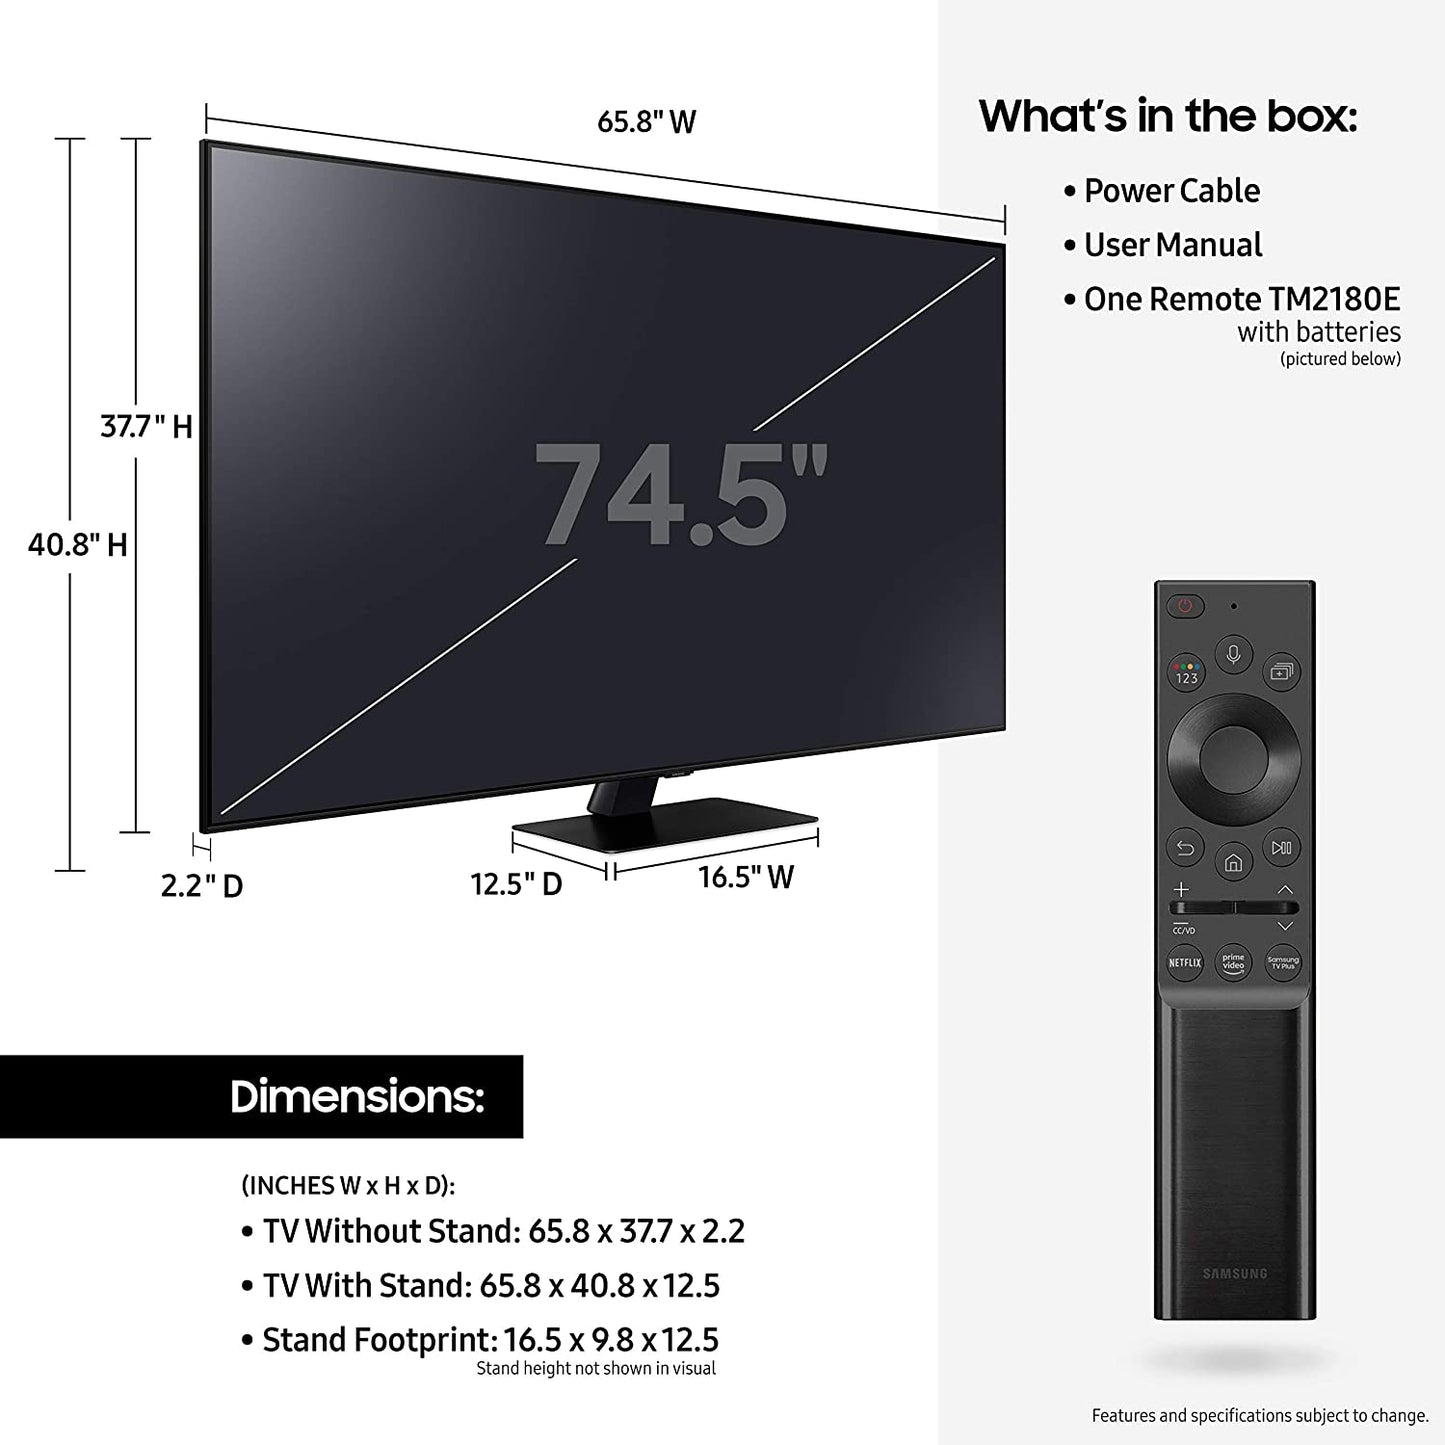 Samsung 75-in Q80A QLED Smart LED TV QN75Q80AAFXZA (2021)